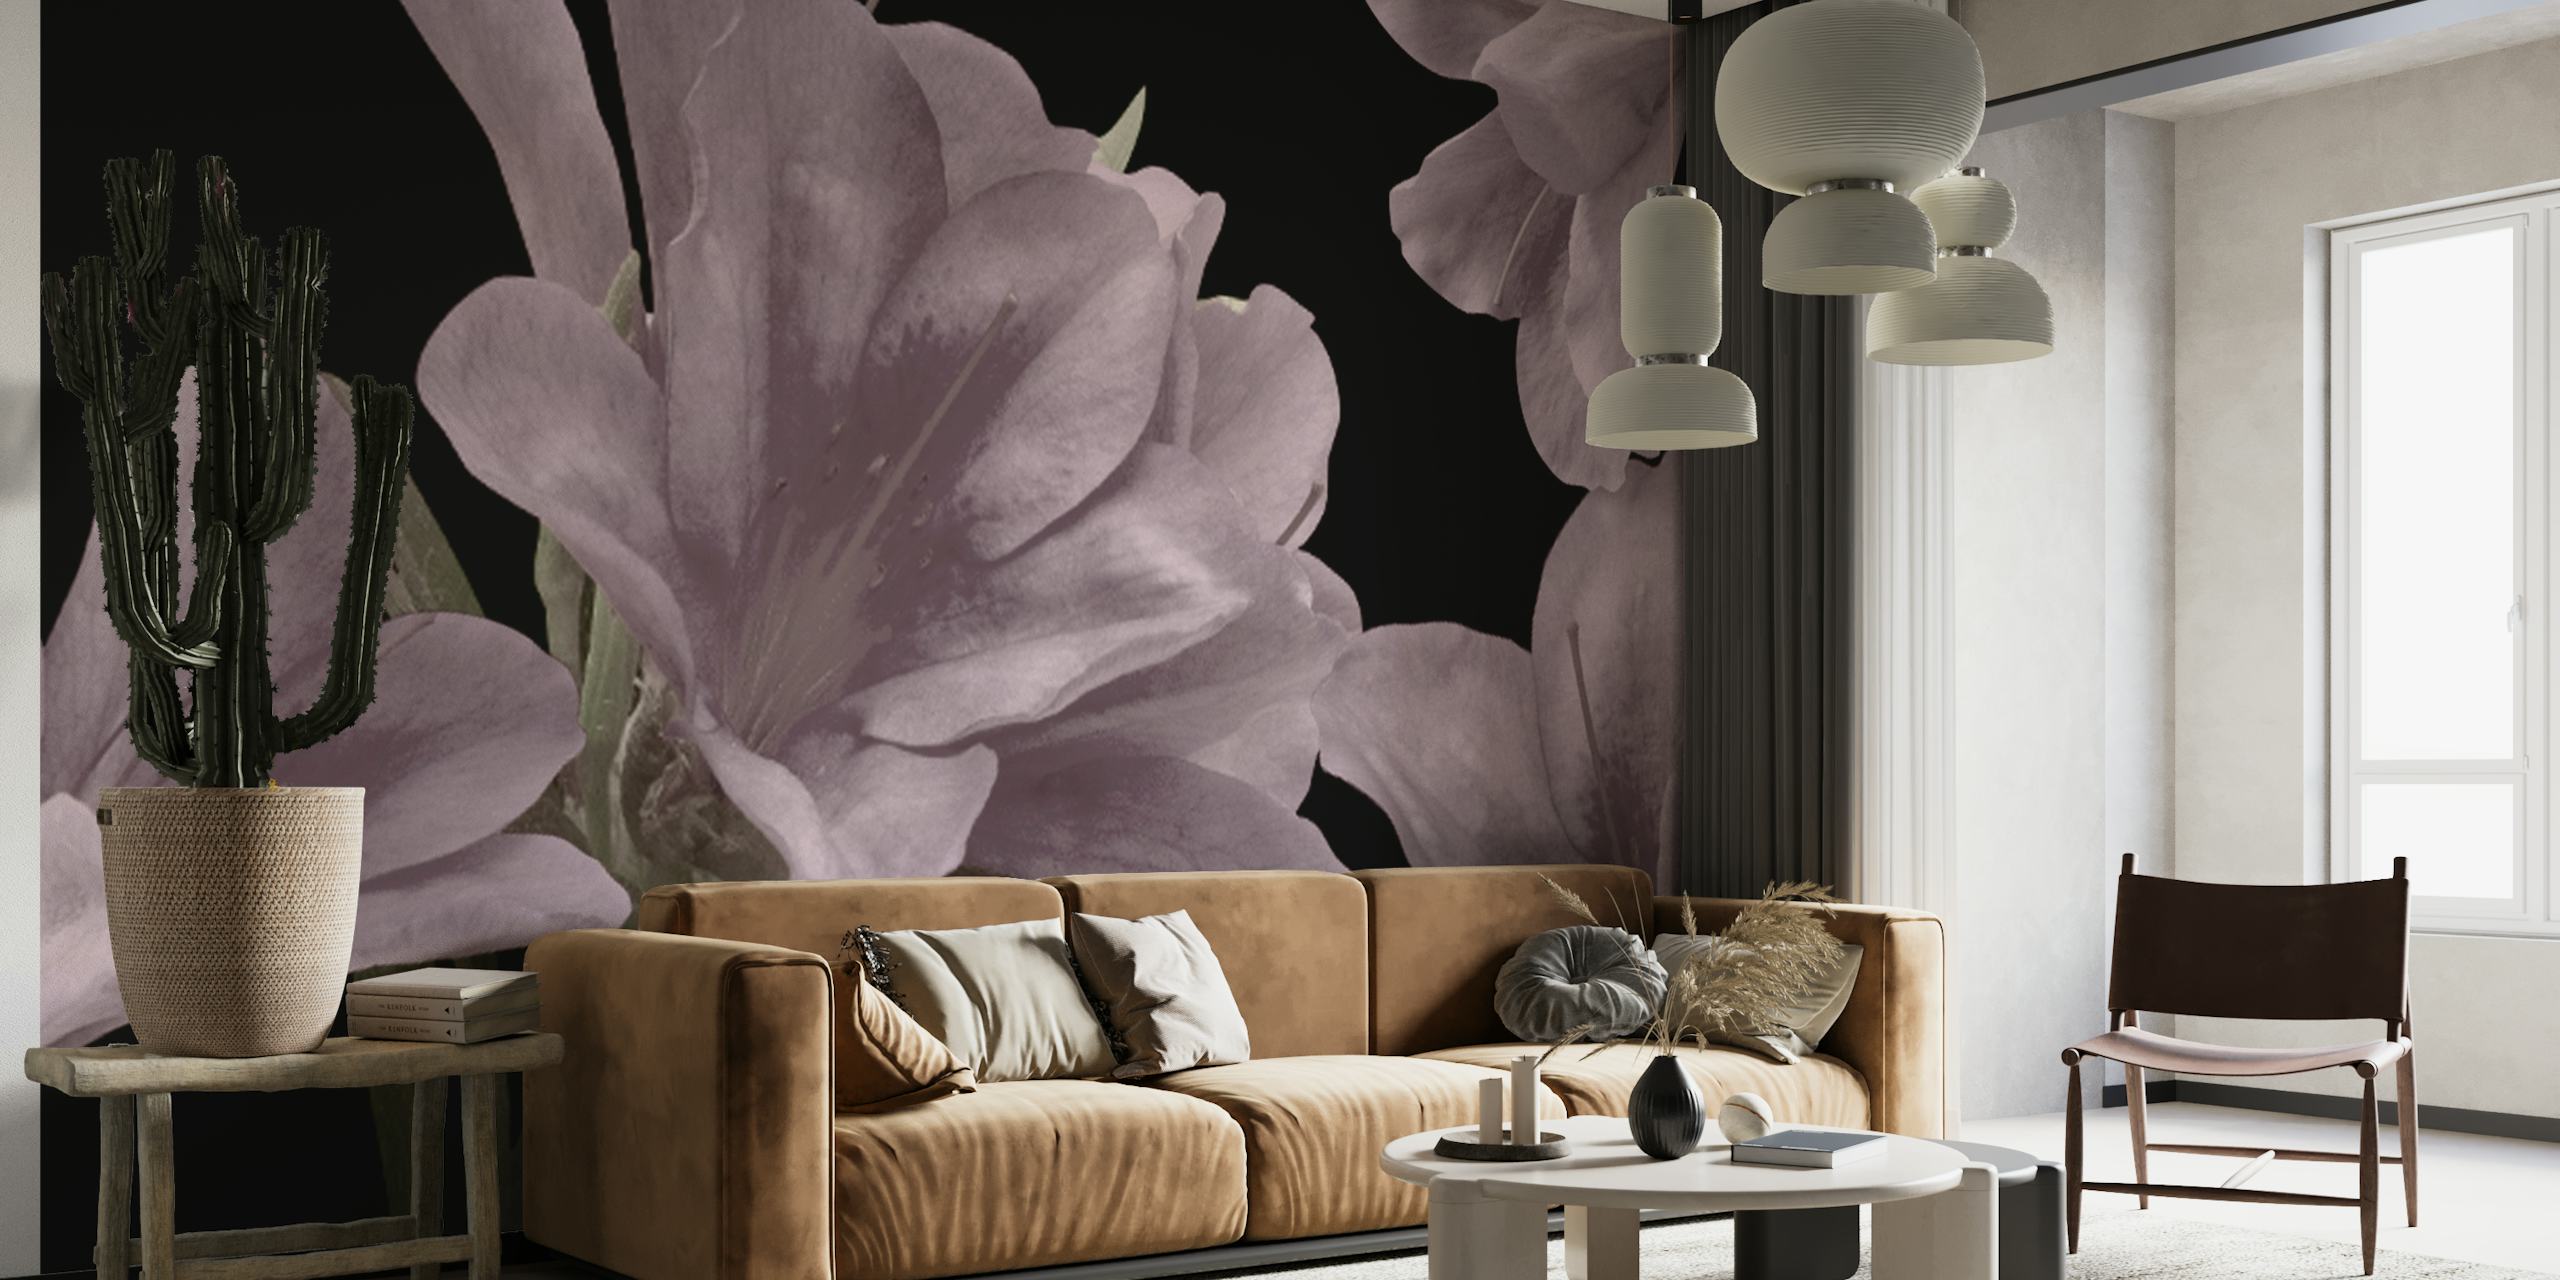 Subtle pale blush lilies bloom against a dark background wall mural